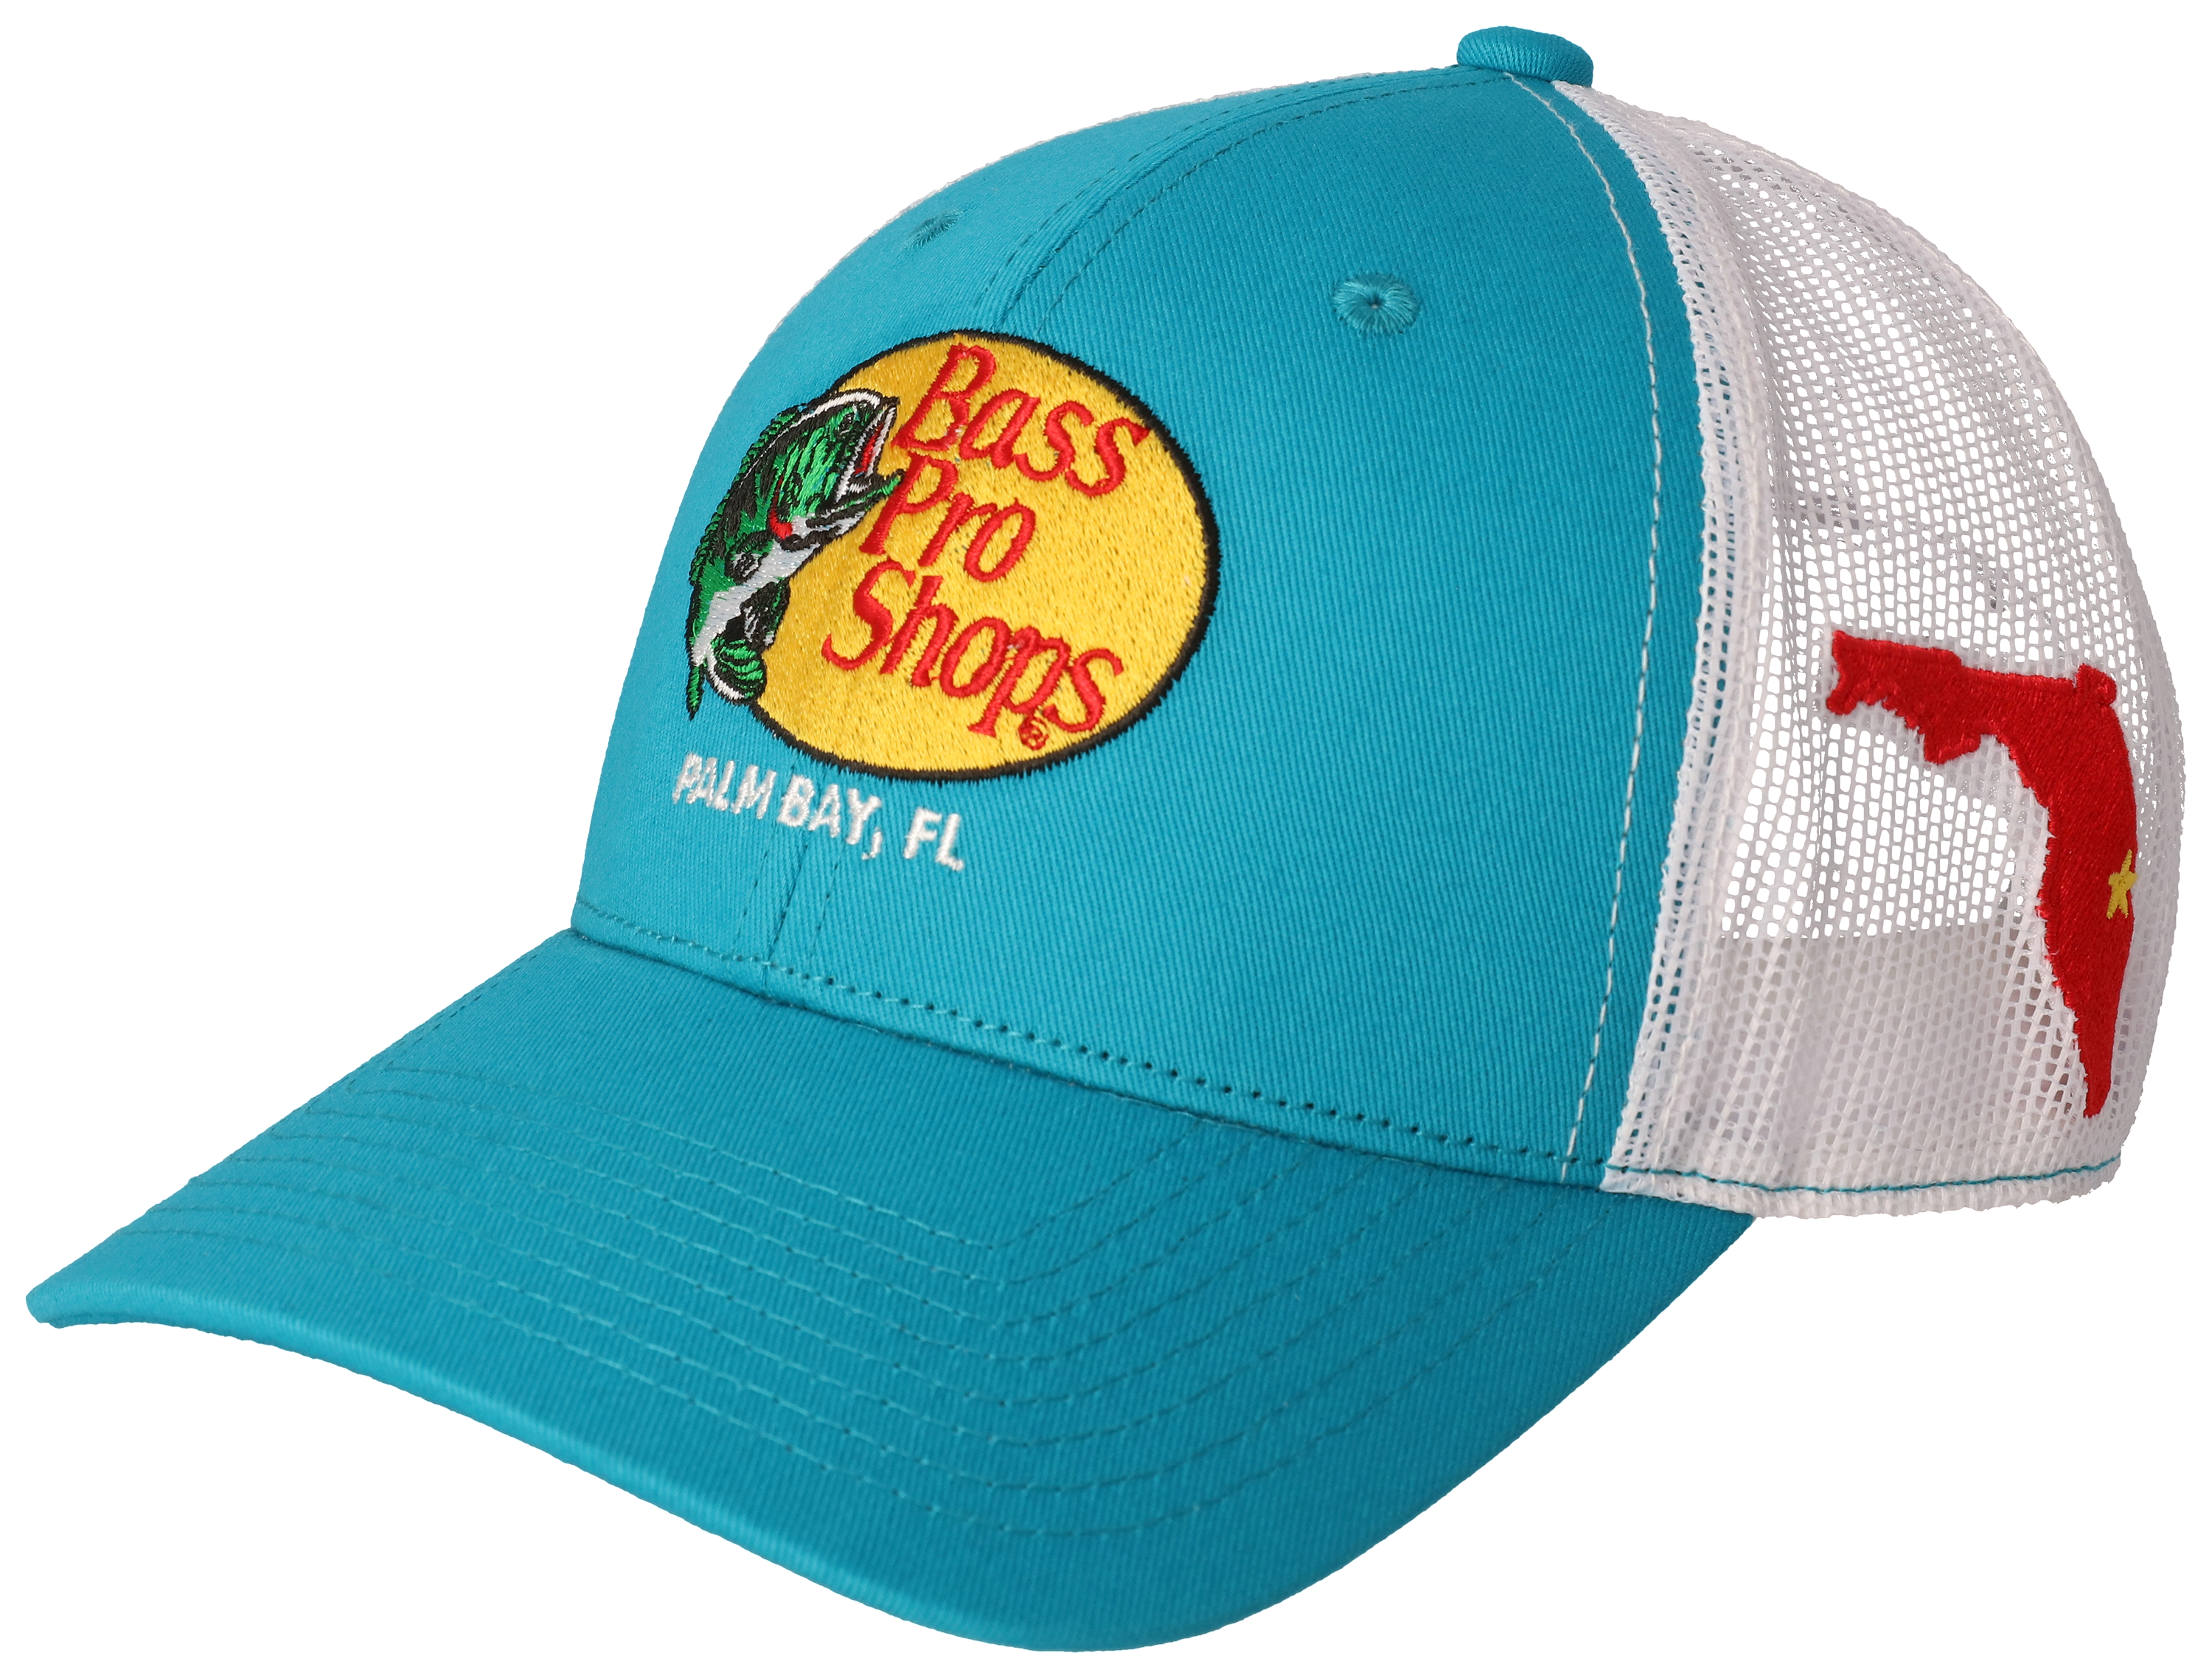 Bass Pro Shops Woodcut Logo Palm Bay, FL Snapback Cap